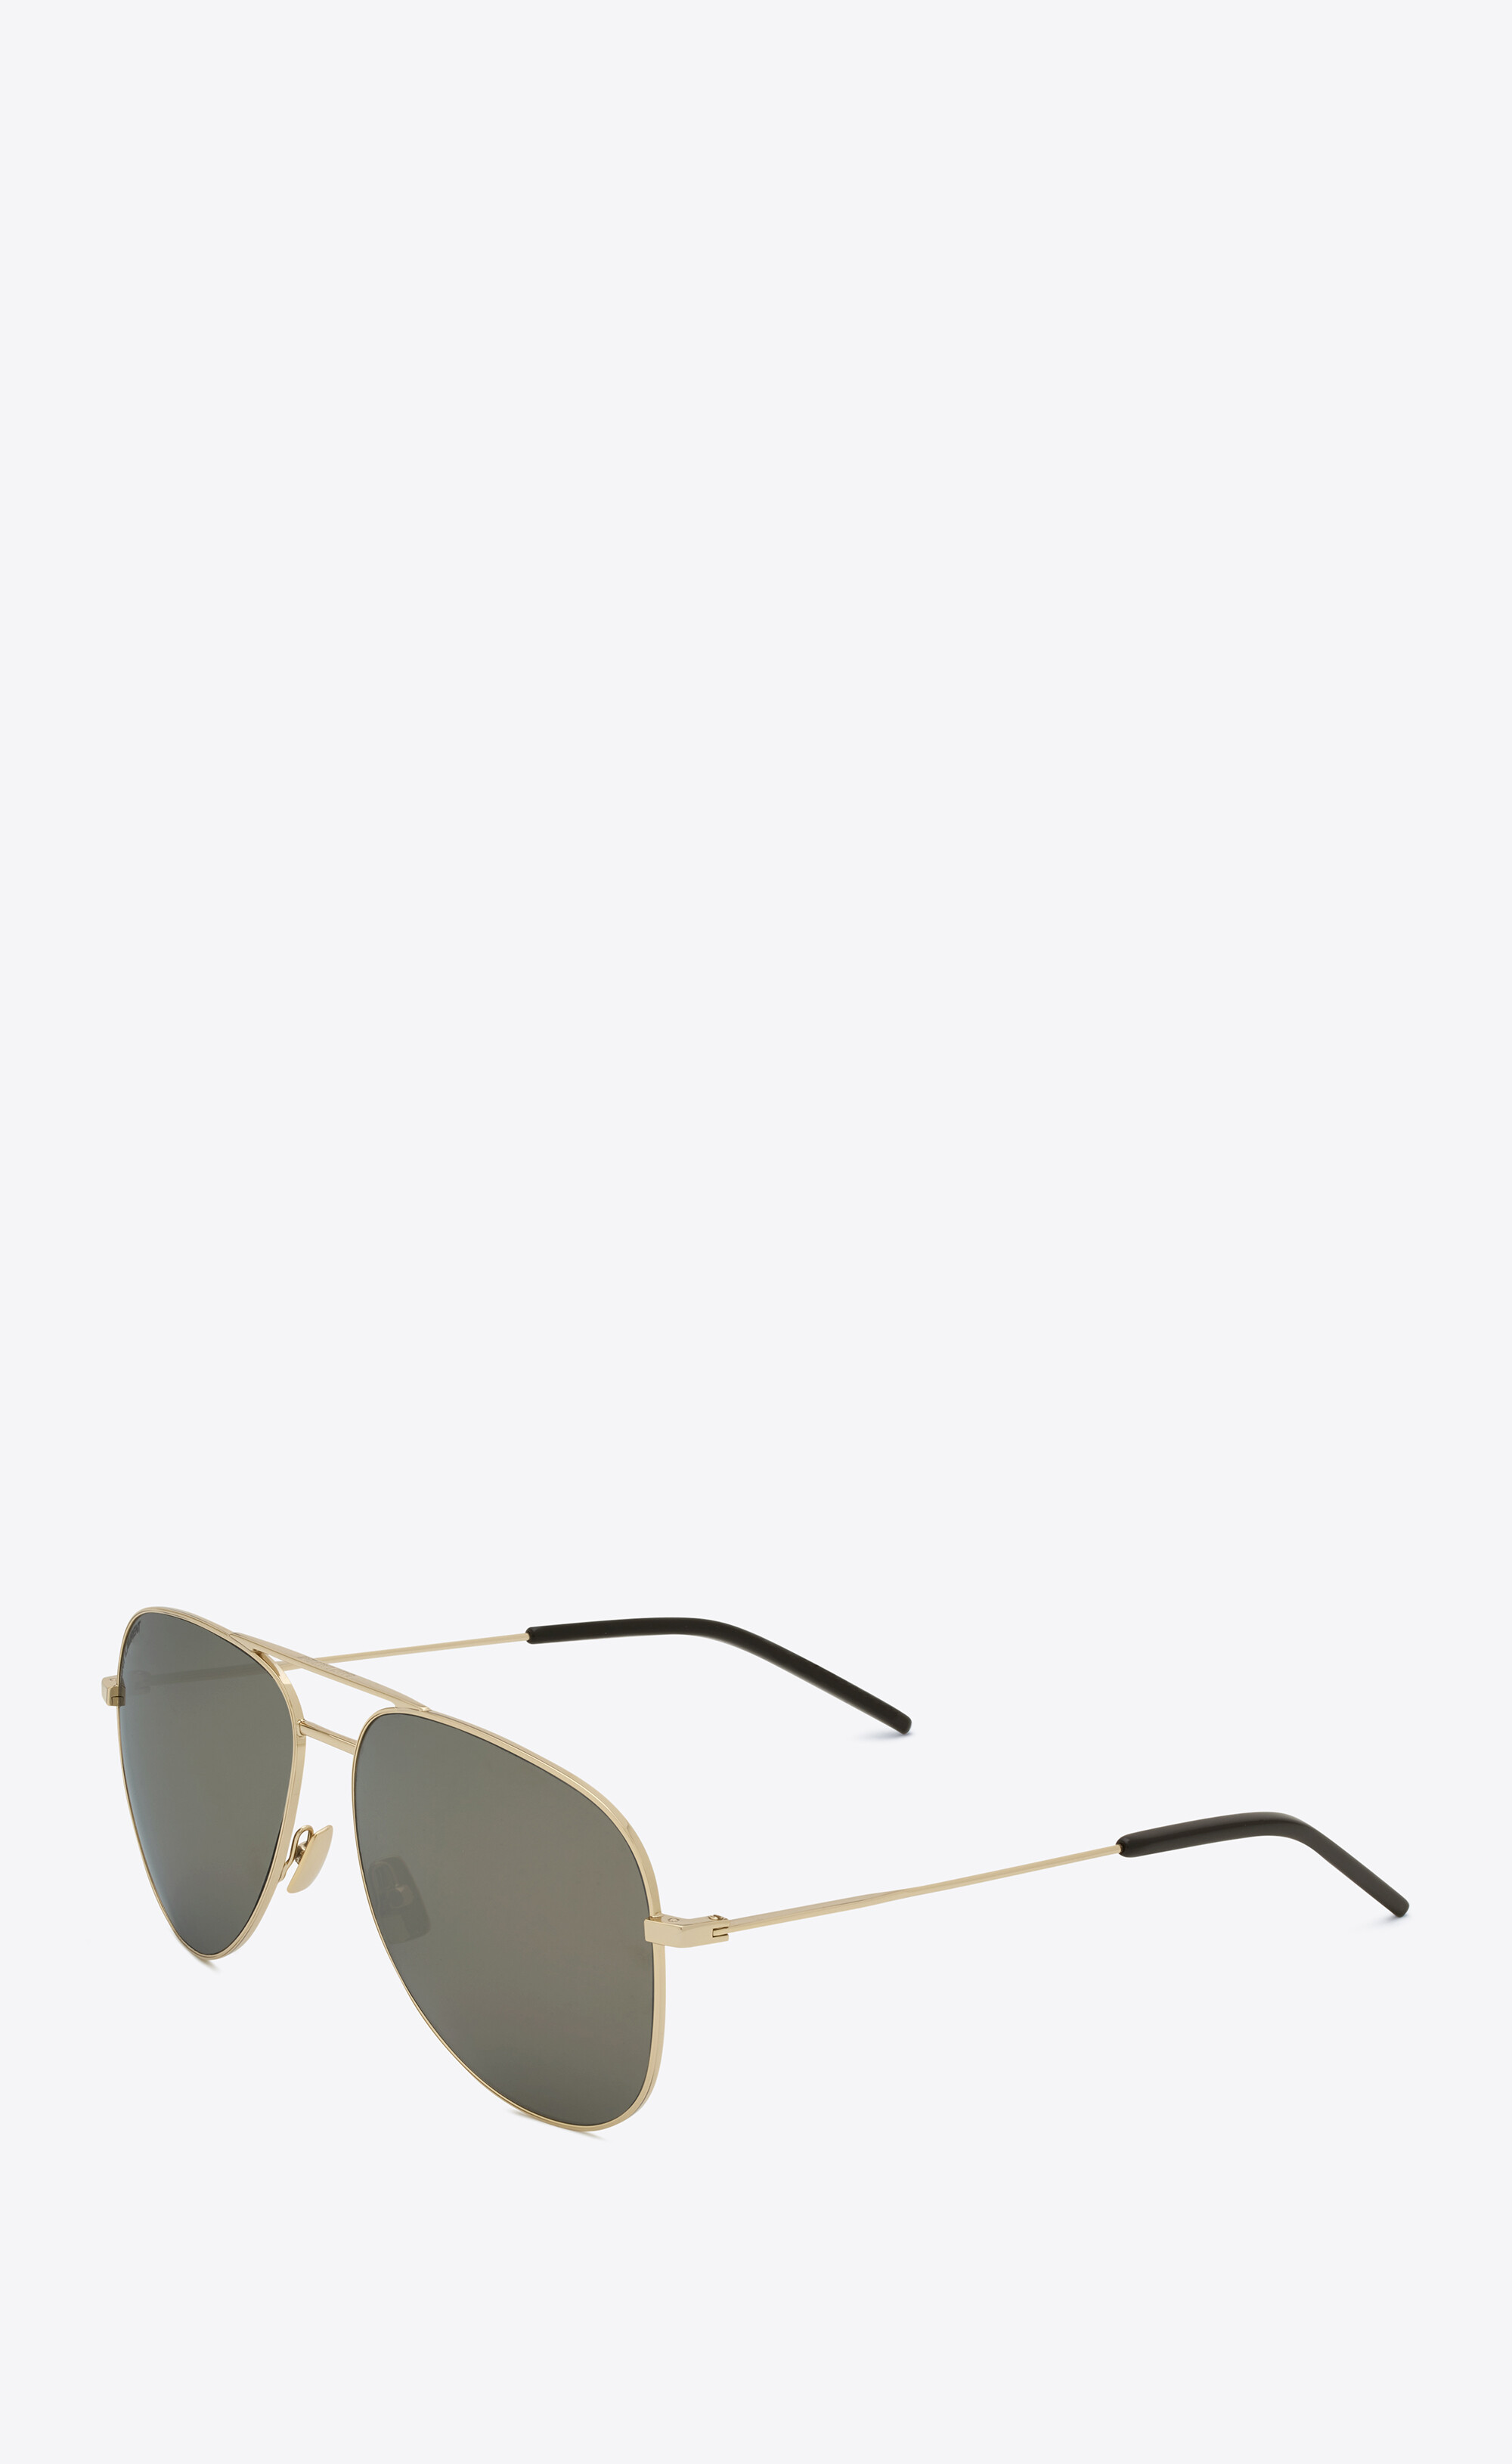 Saint Laurent CLASSIC 11 M 007 59 Sunglasses